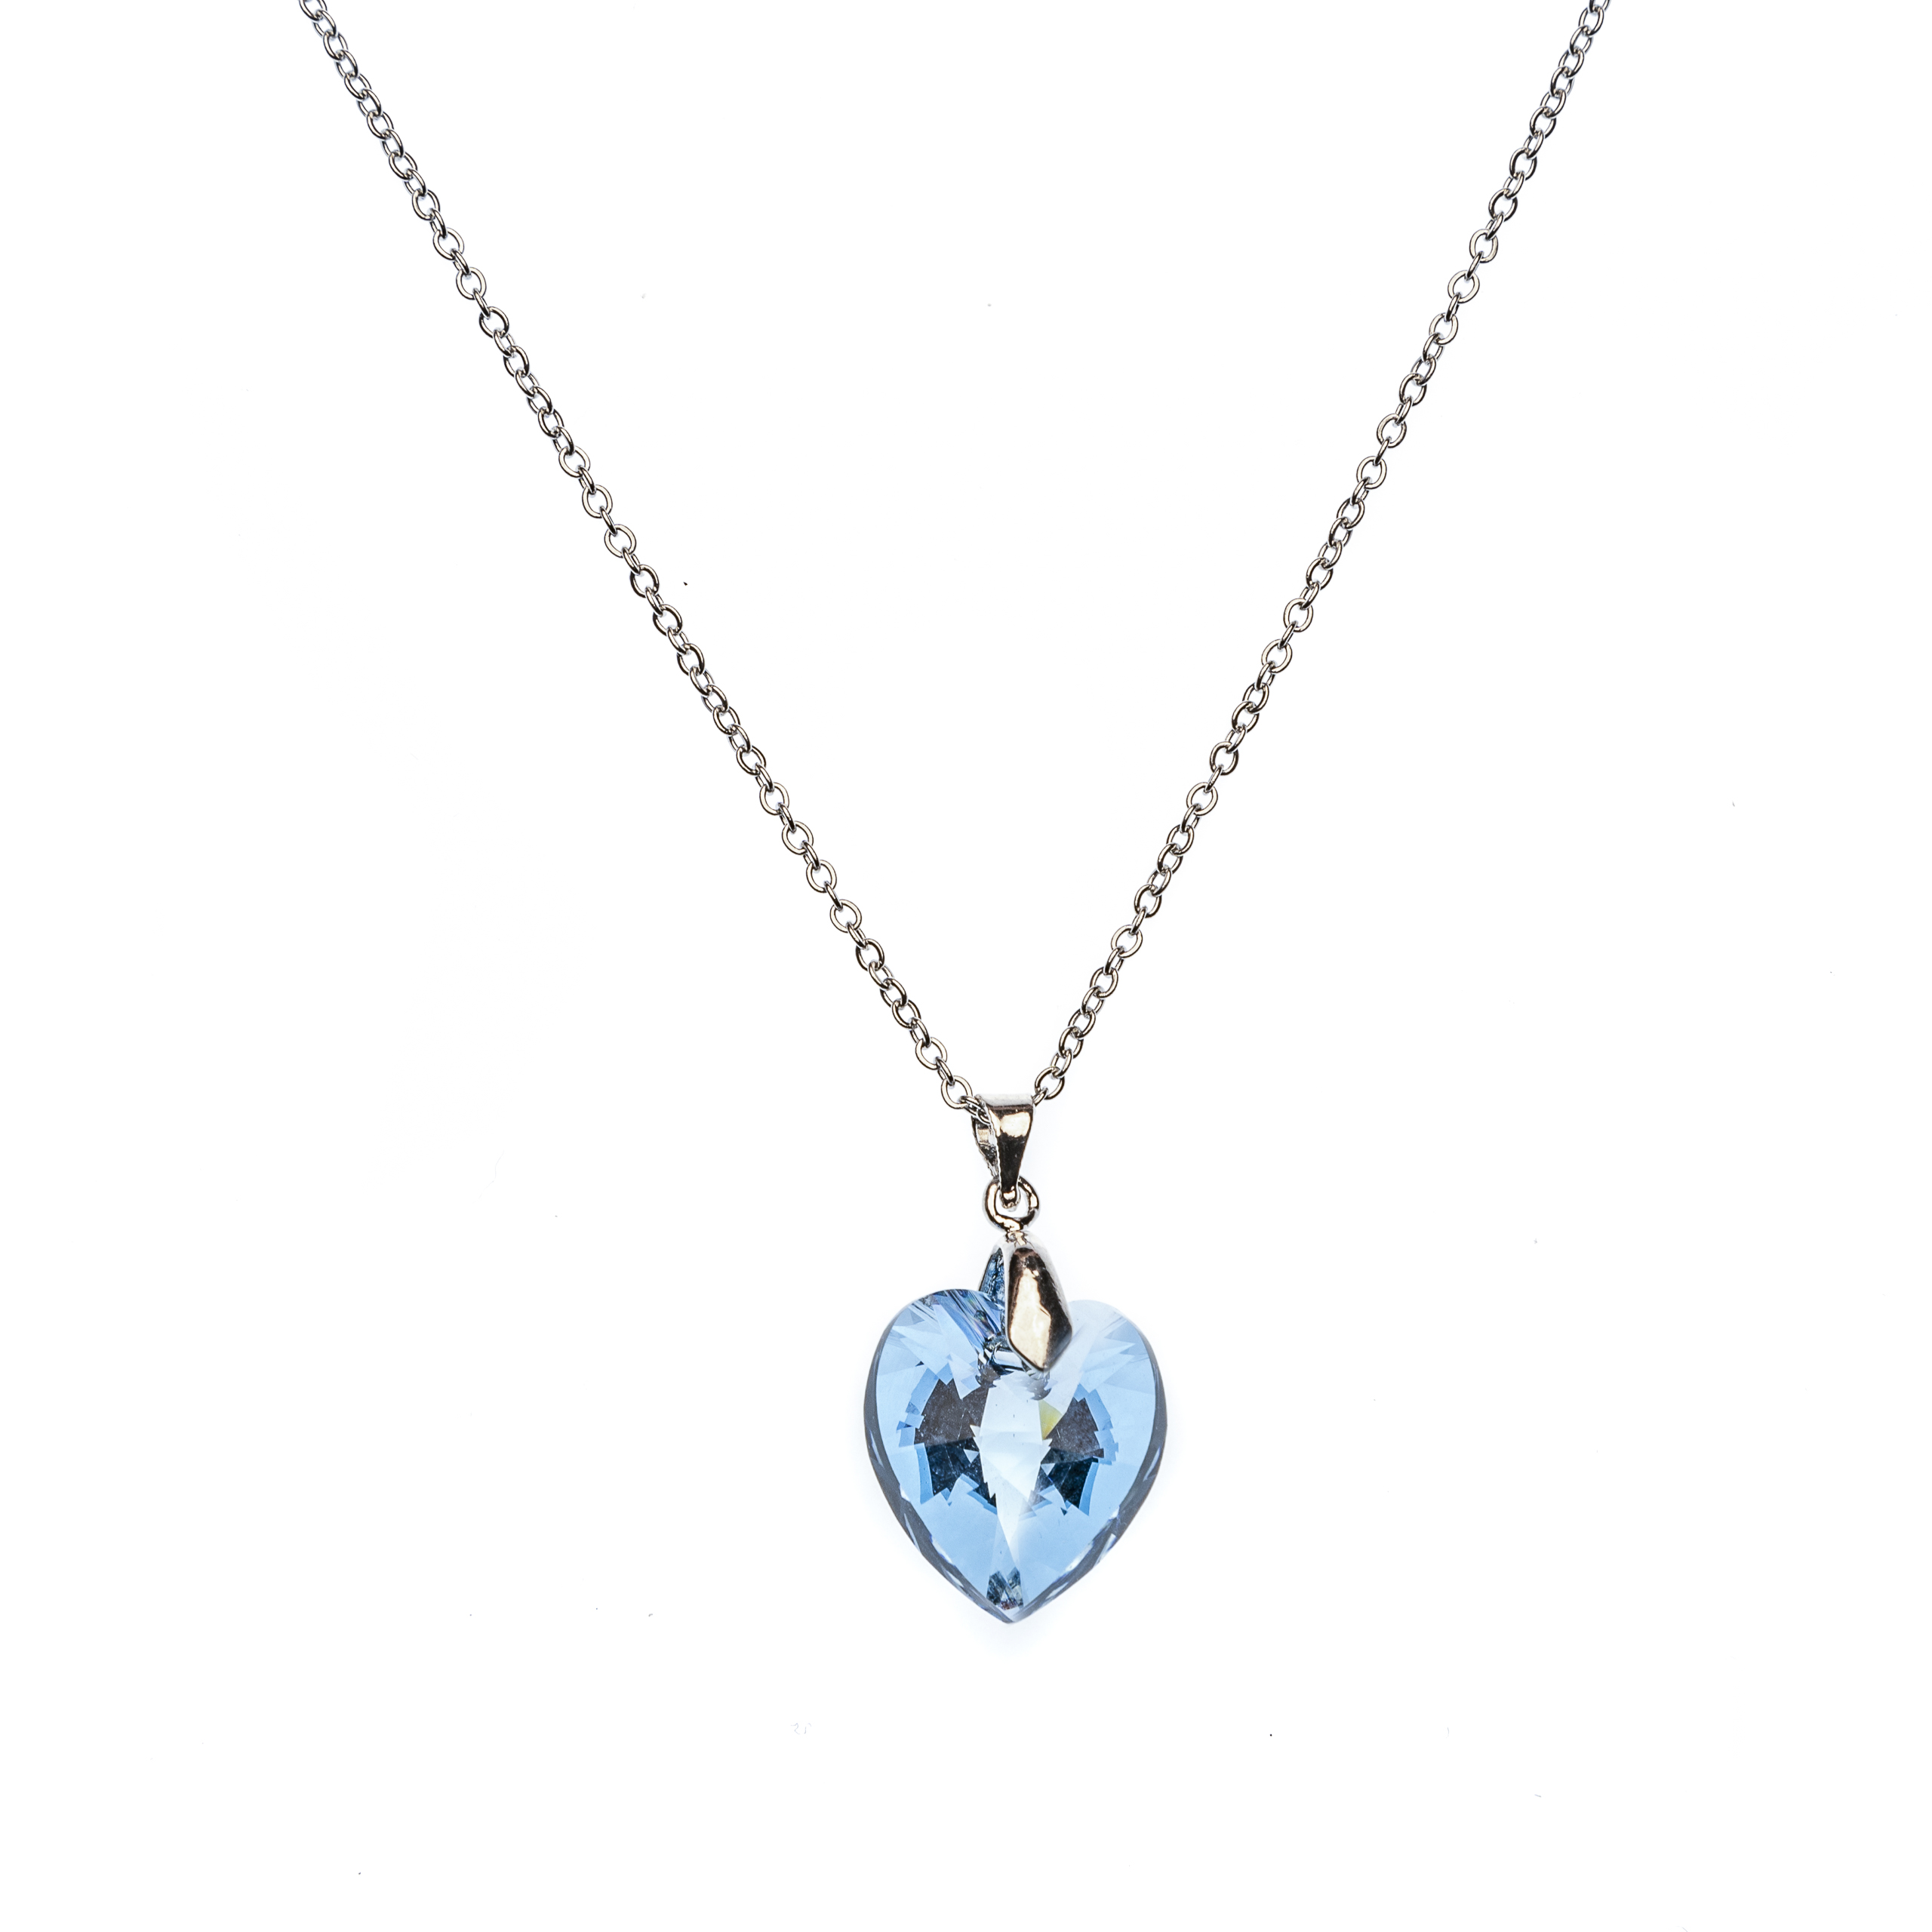 Première Dame Necklace with Swarovski Heart Pendant